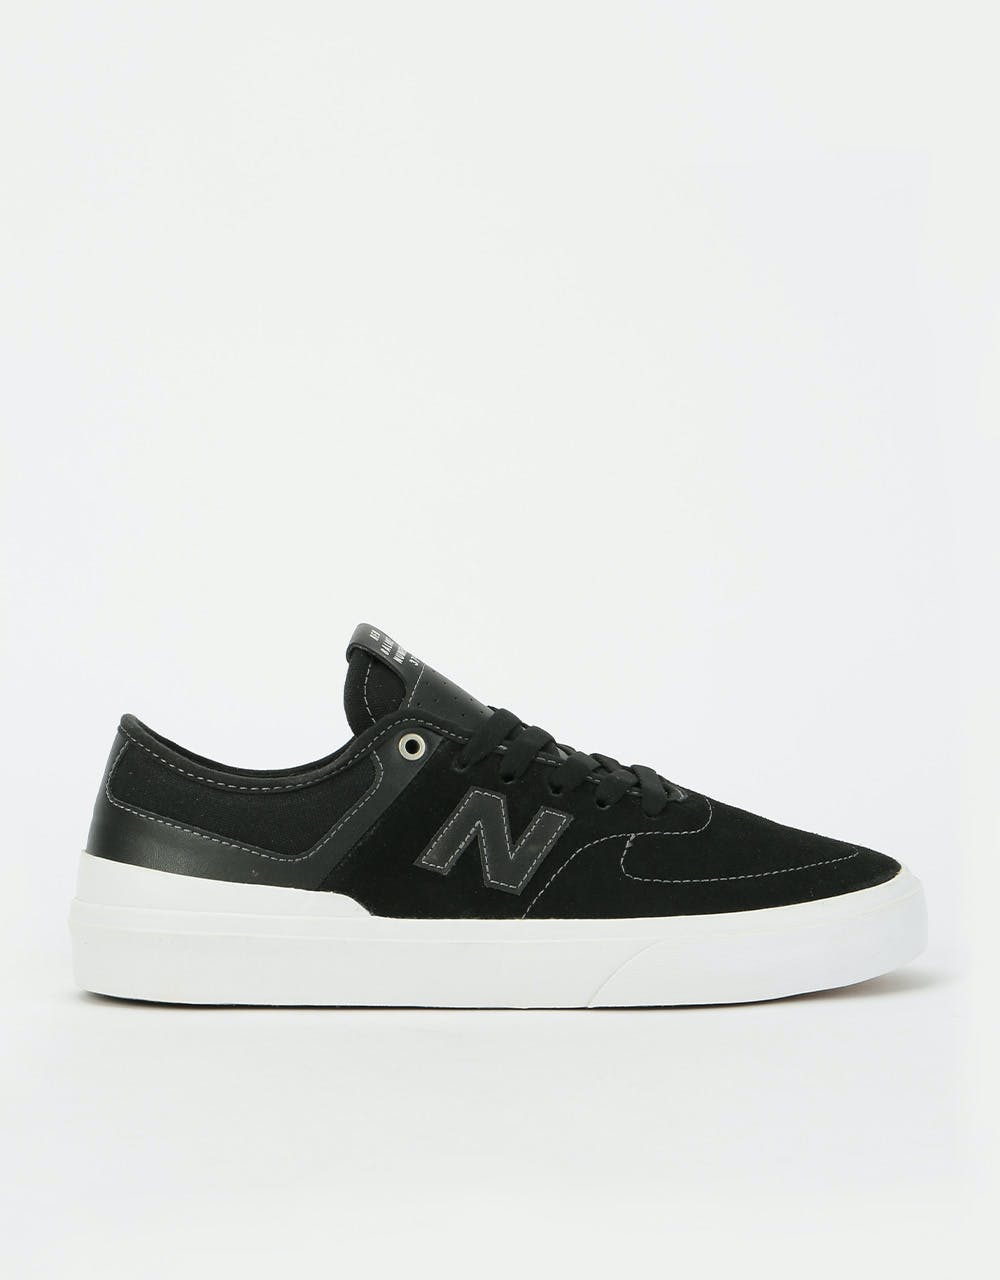 New Balance Numeric 379 Skate Shoes - Black/White